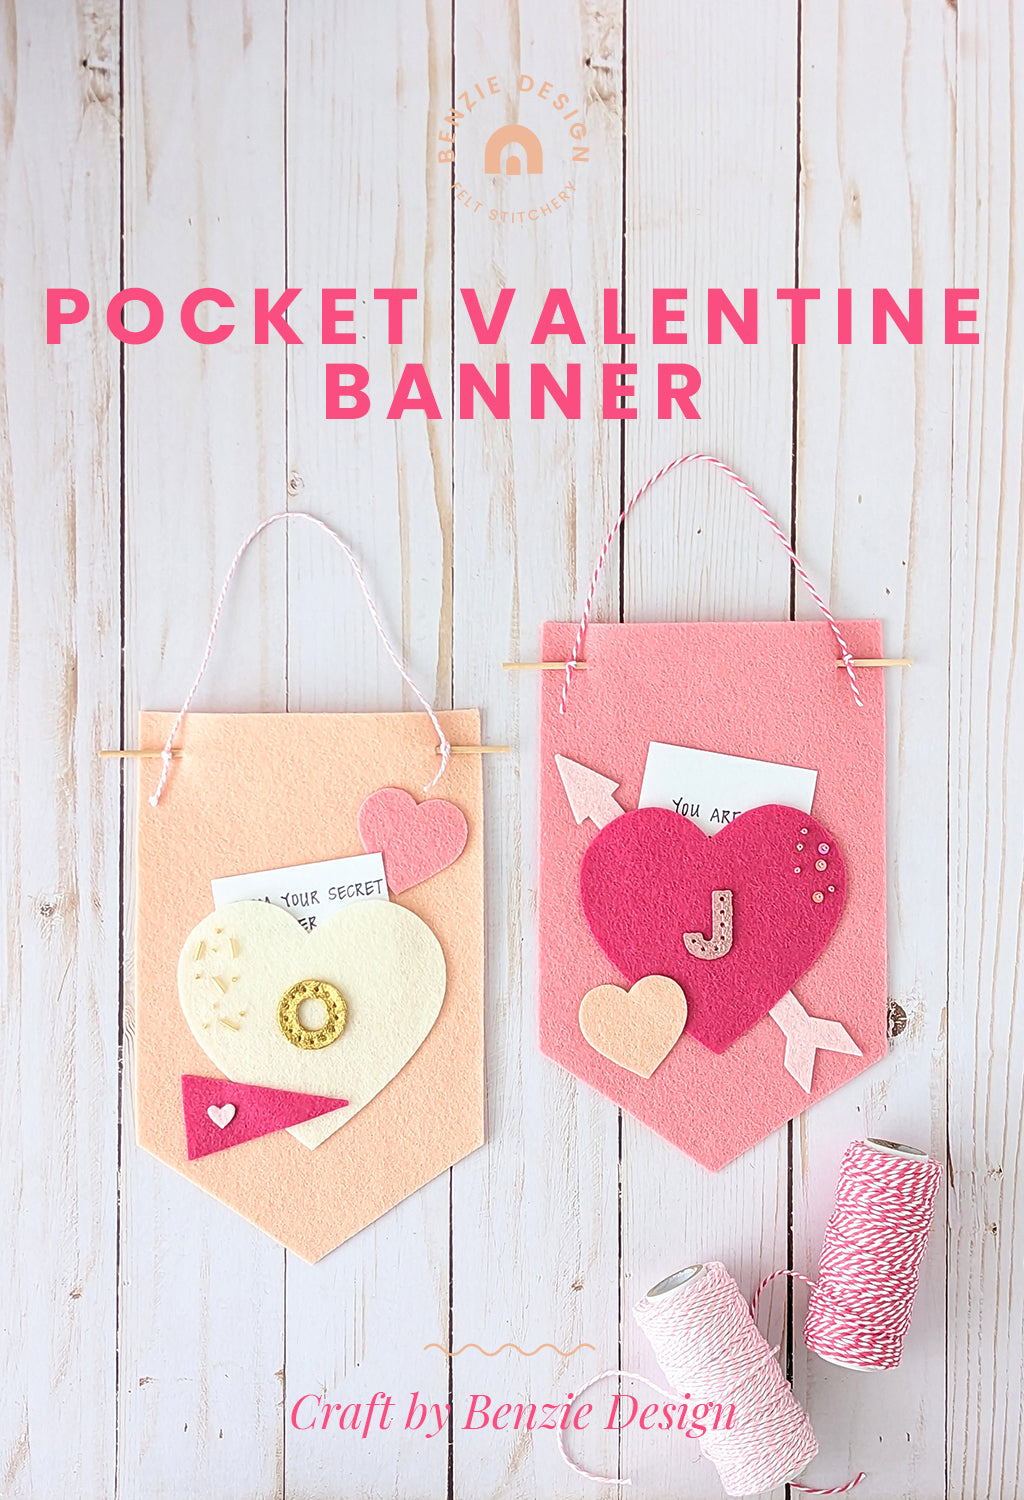 Pocket Valentine Banner